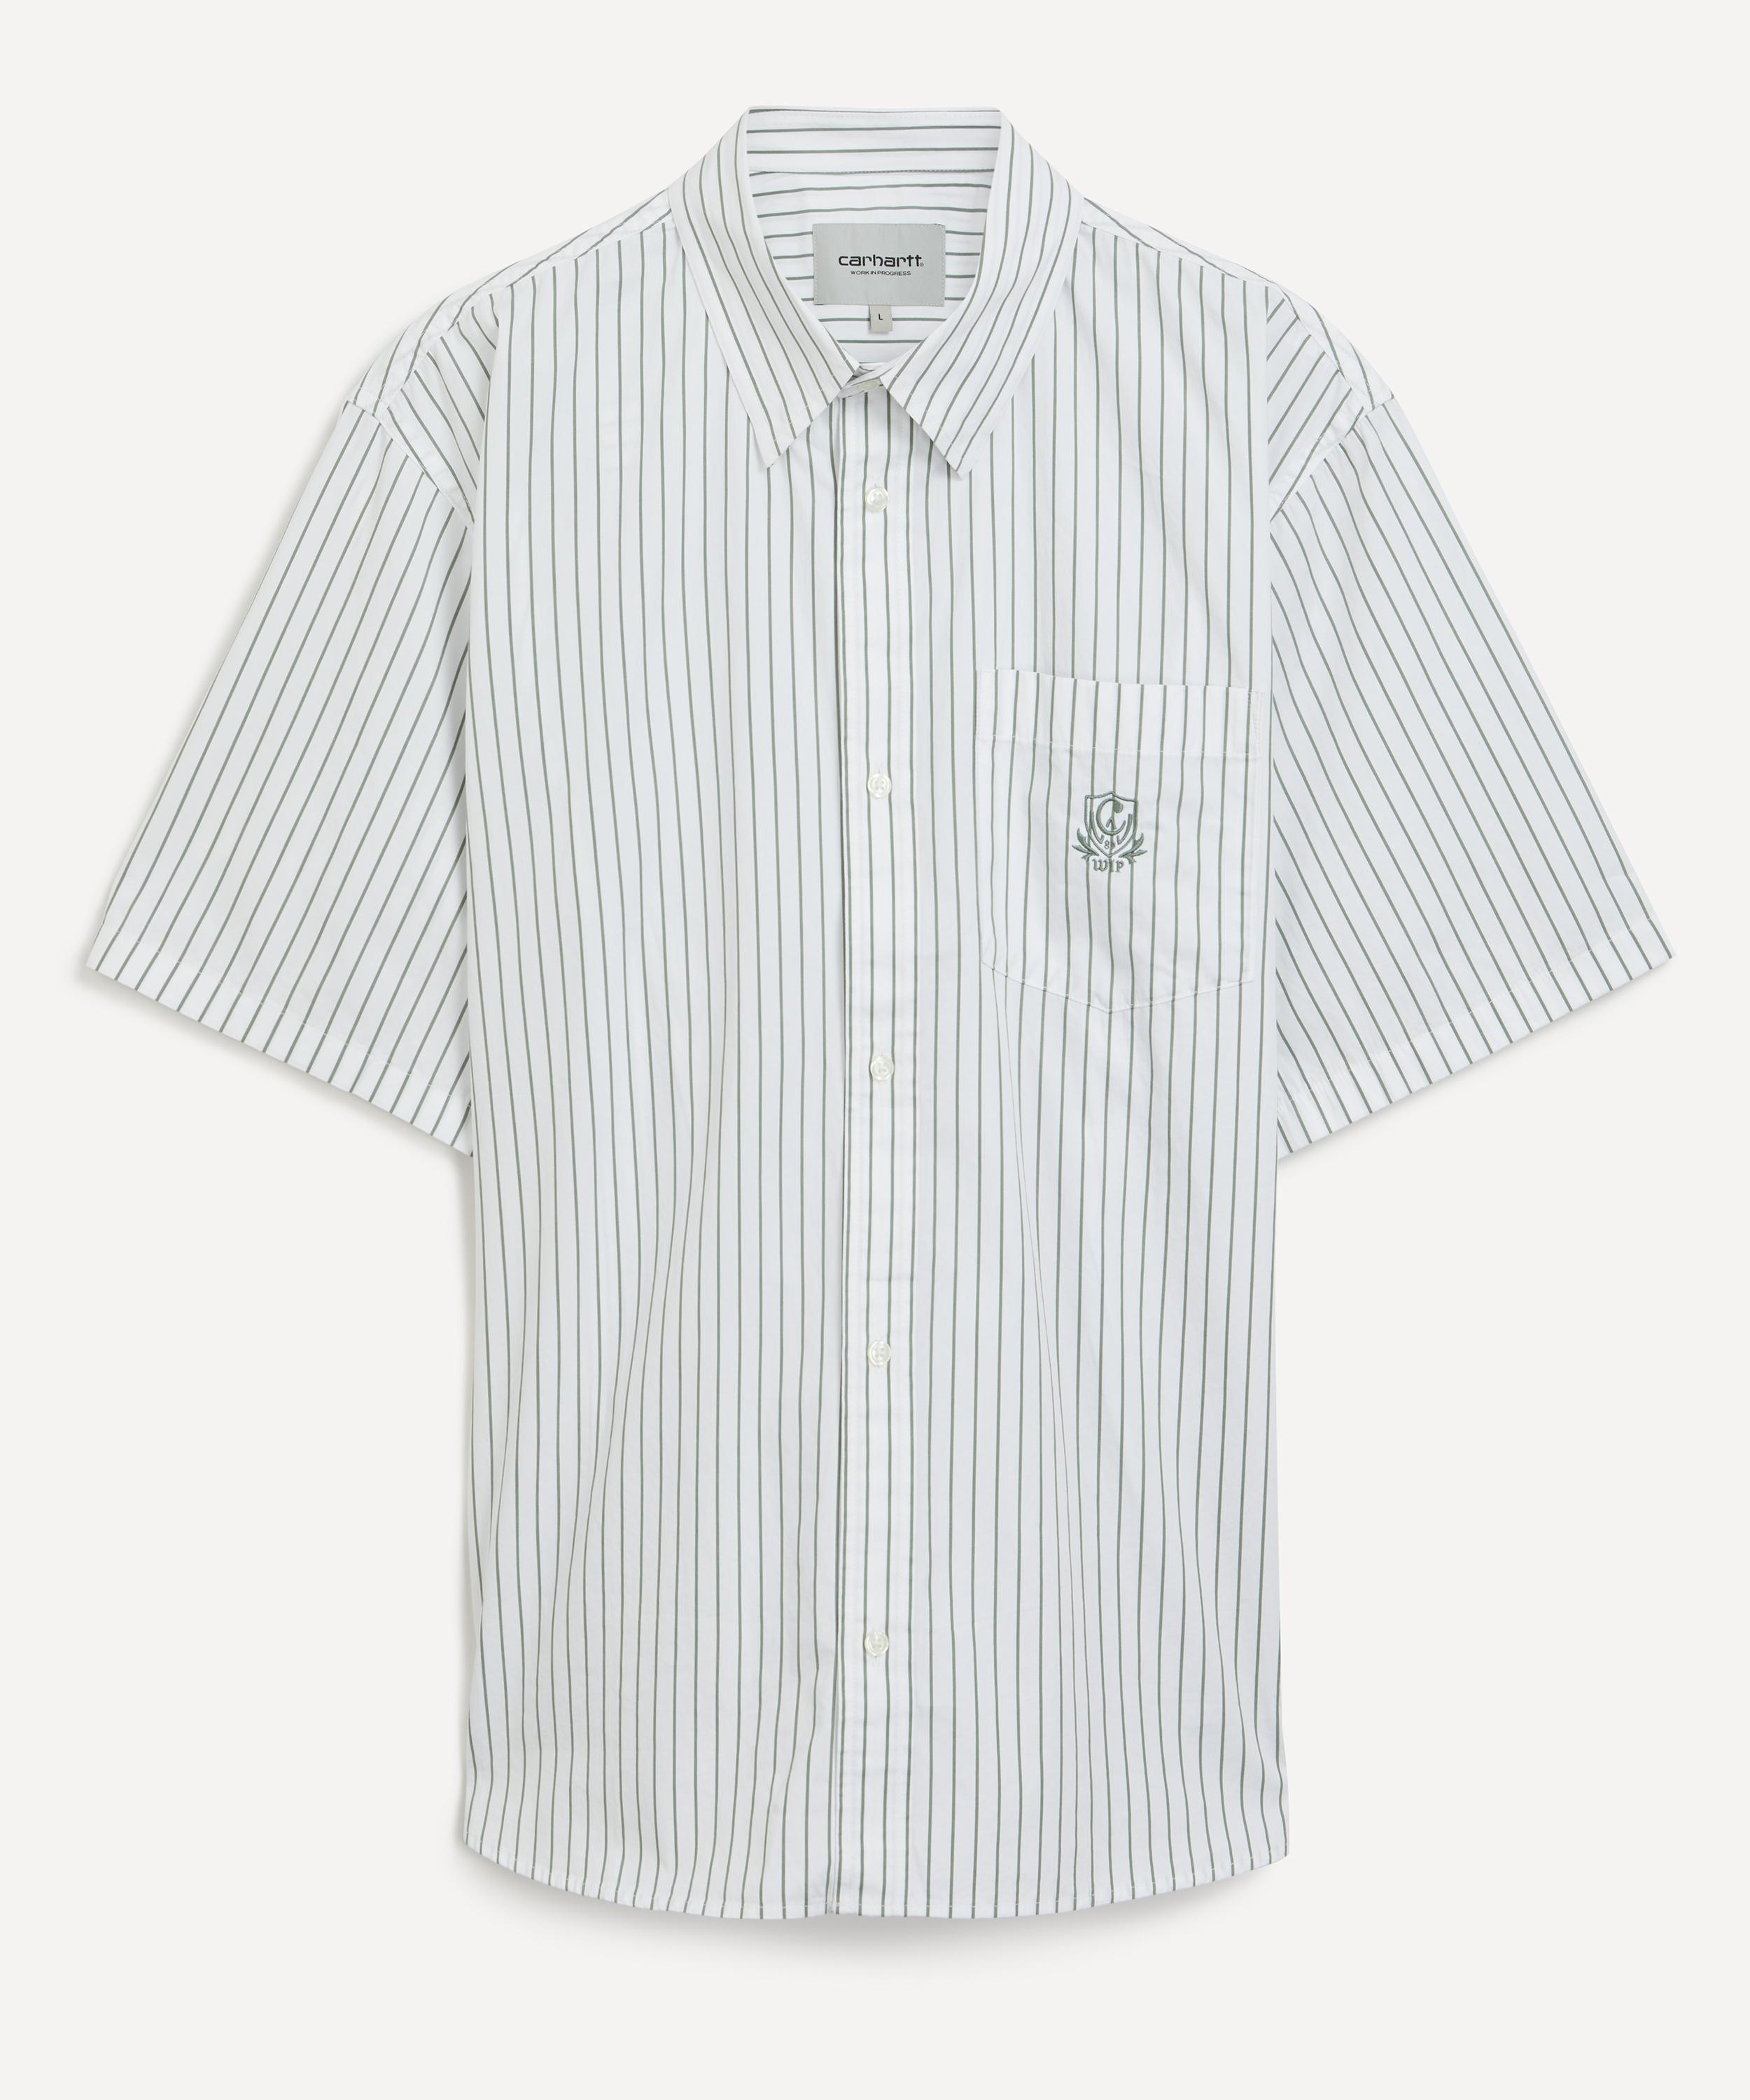 SS Linus Striped Shirt - 1